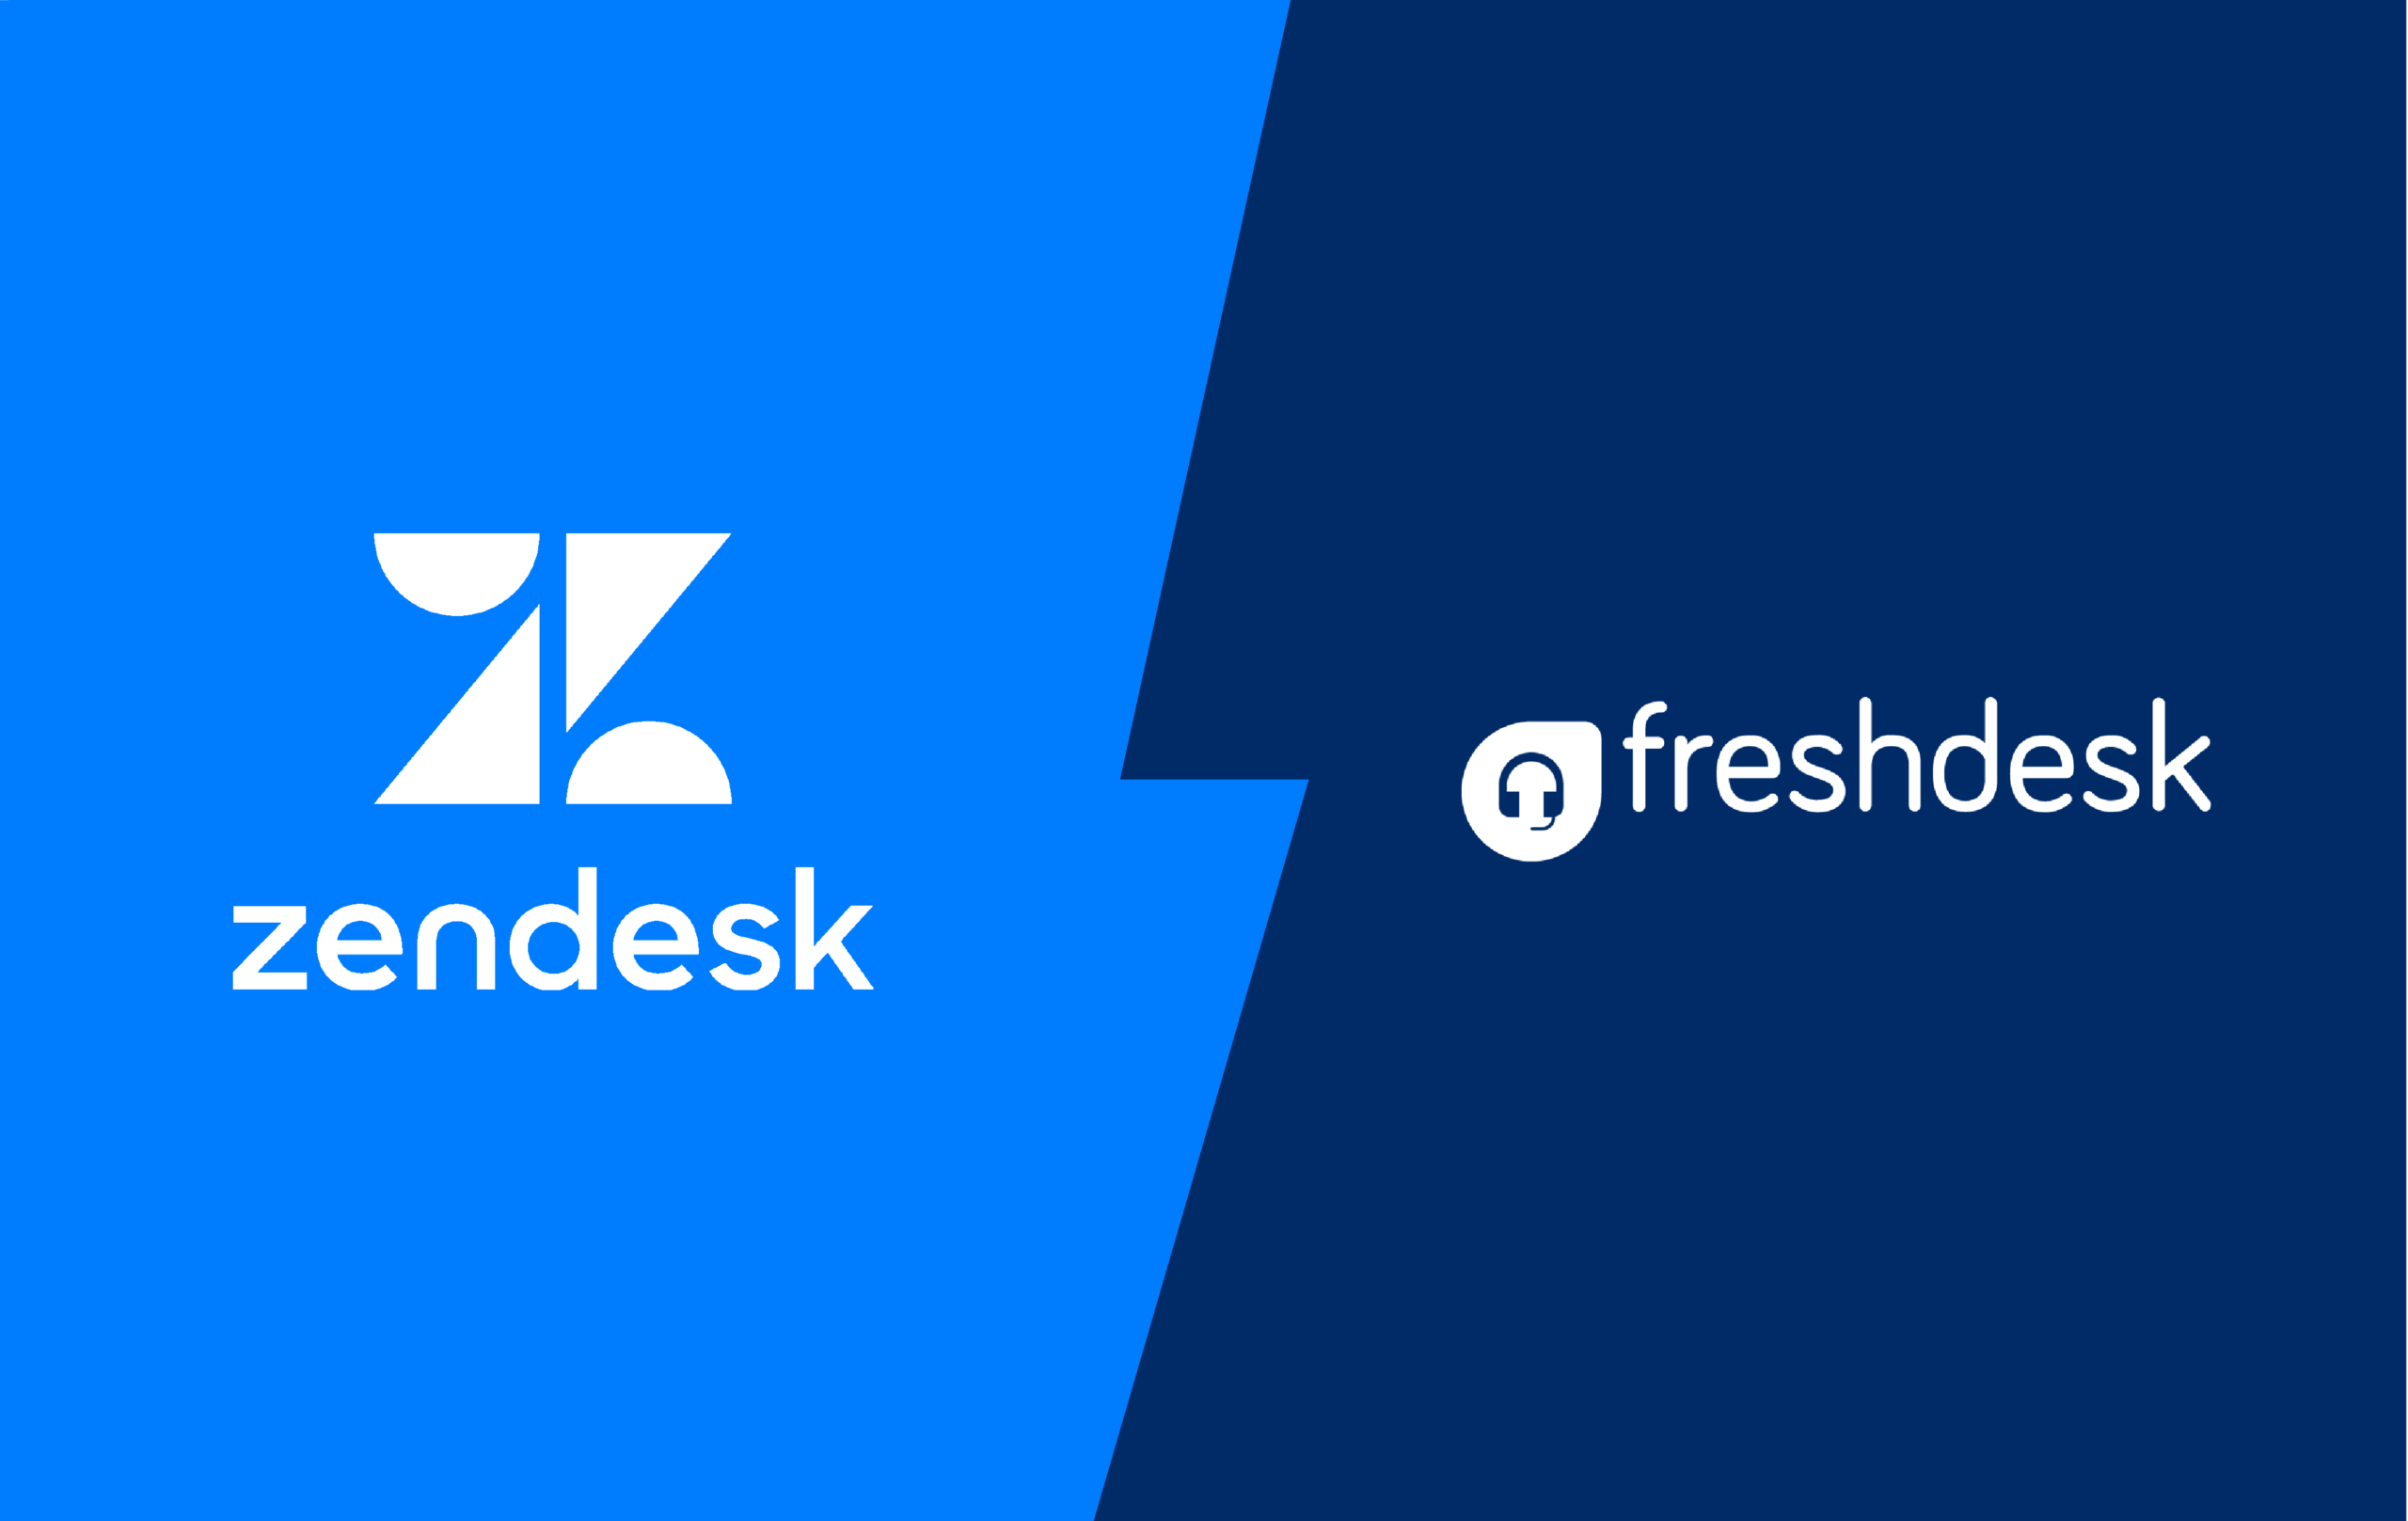 Freshdesk and Zendesk logos